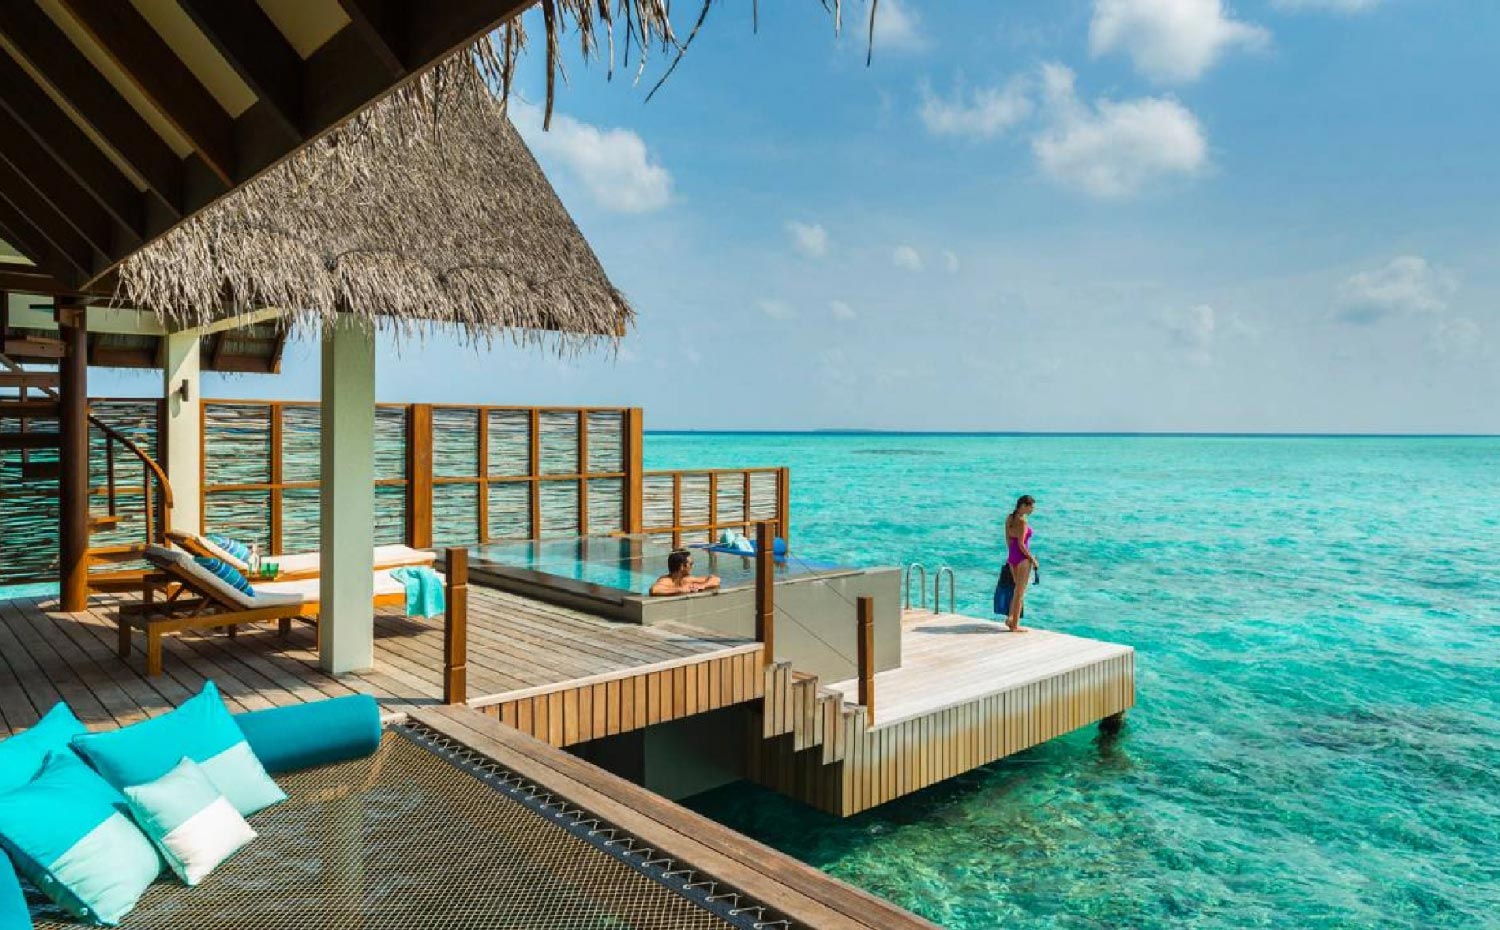 Four Seasons Maldives at Landaa Giraavaru Best Maldives resorts 2023 Nominee